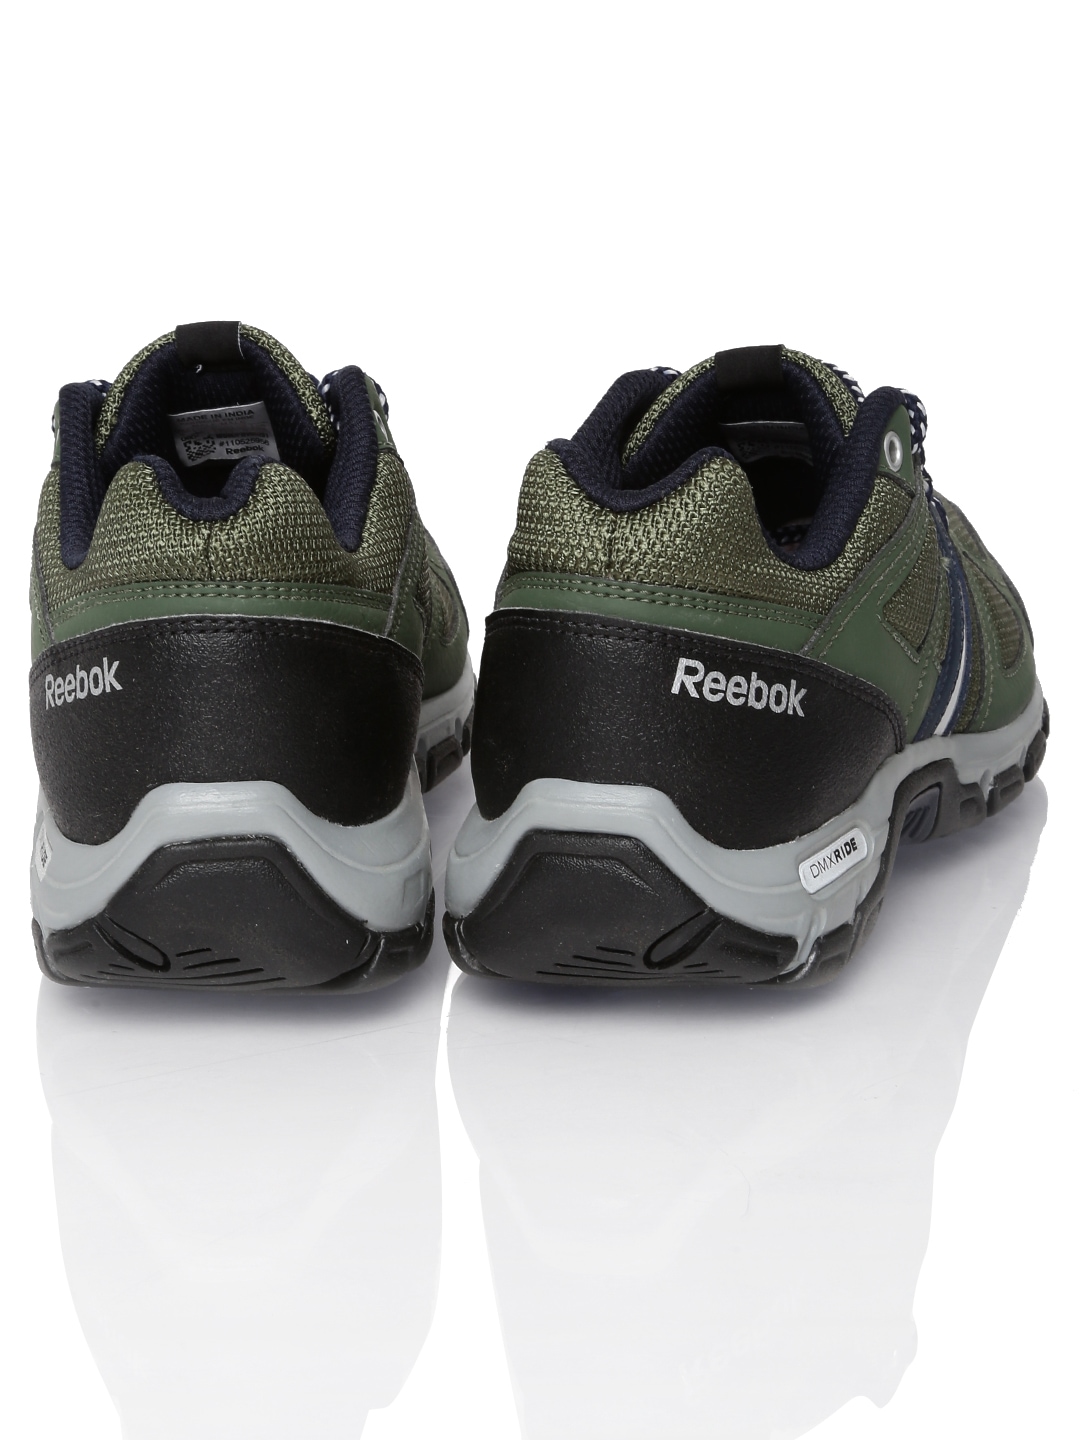 reebok adventure rider shoes